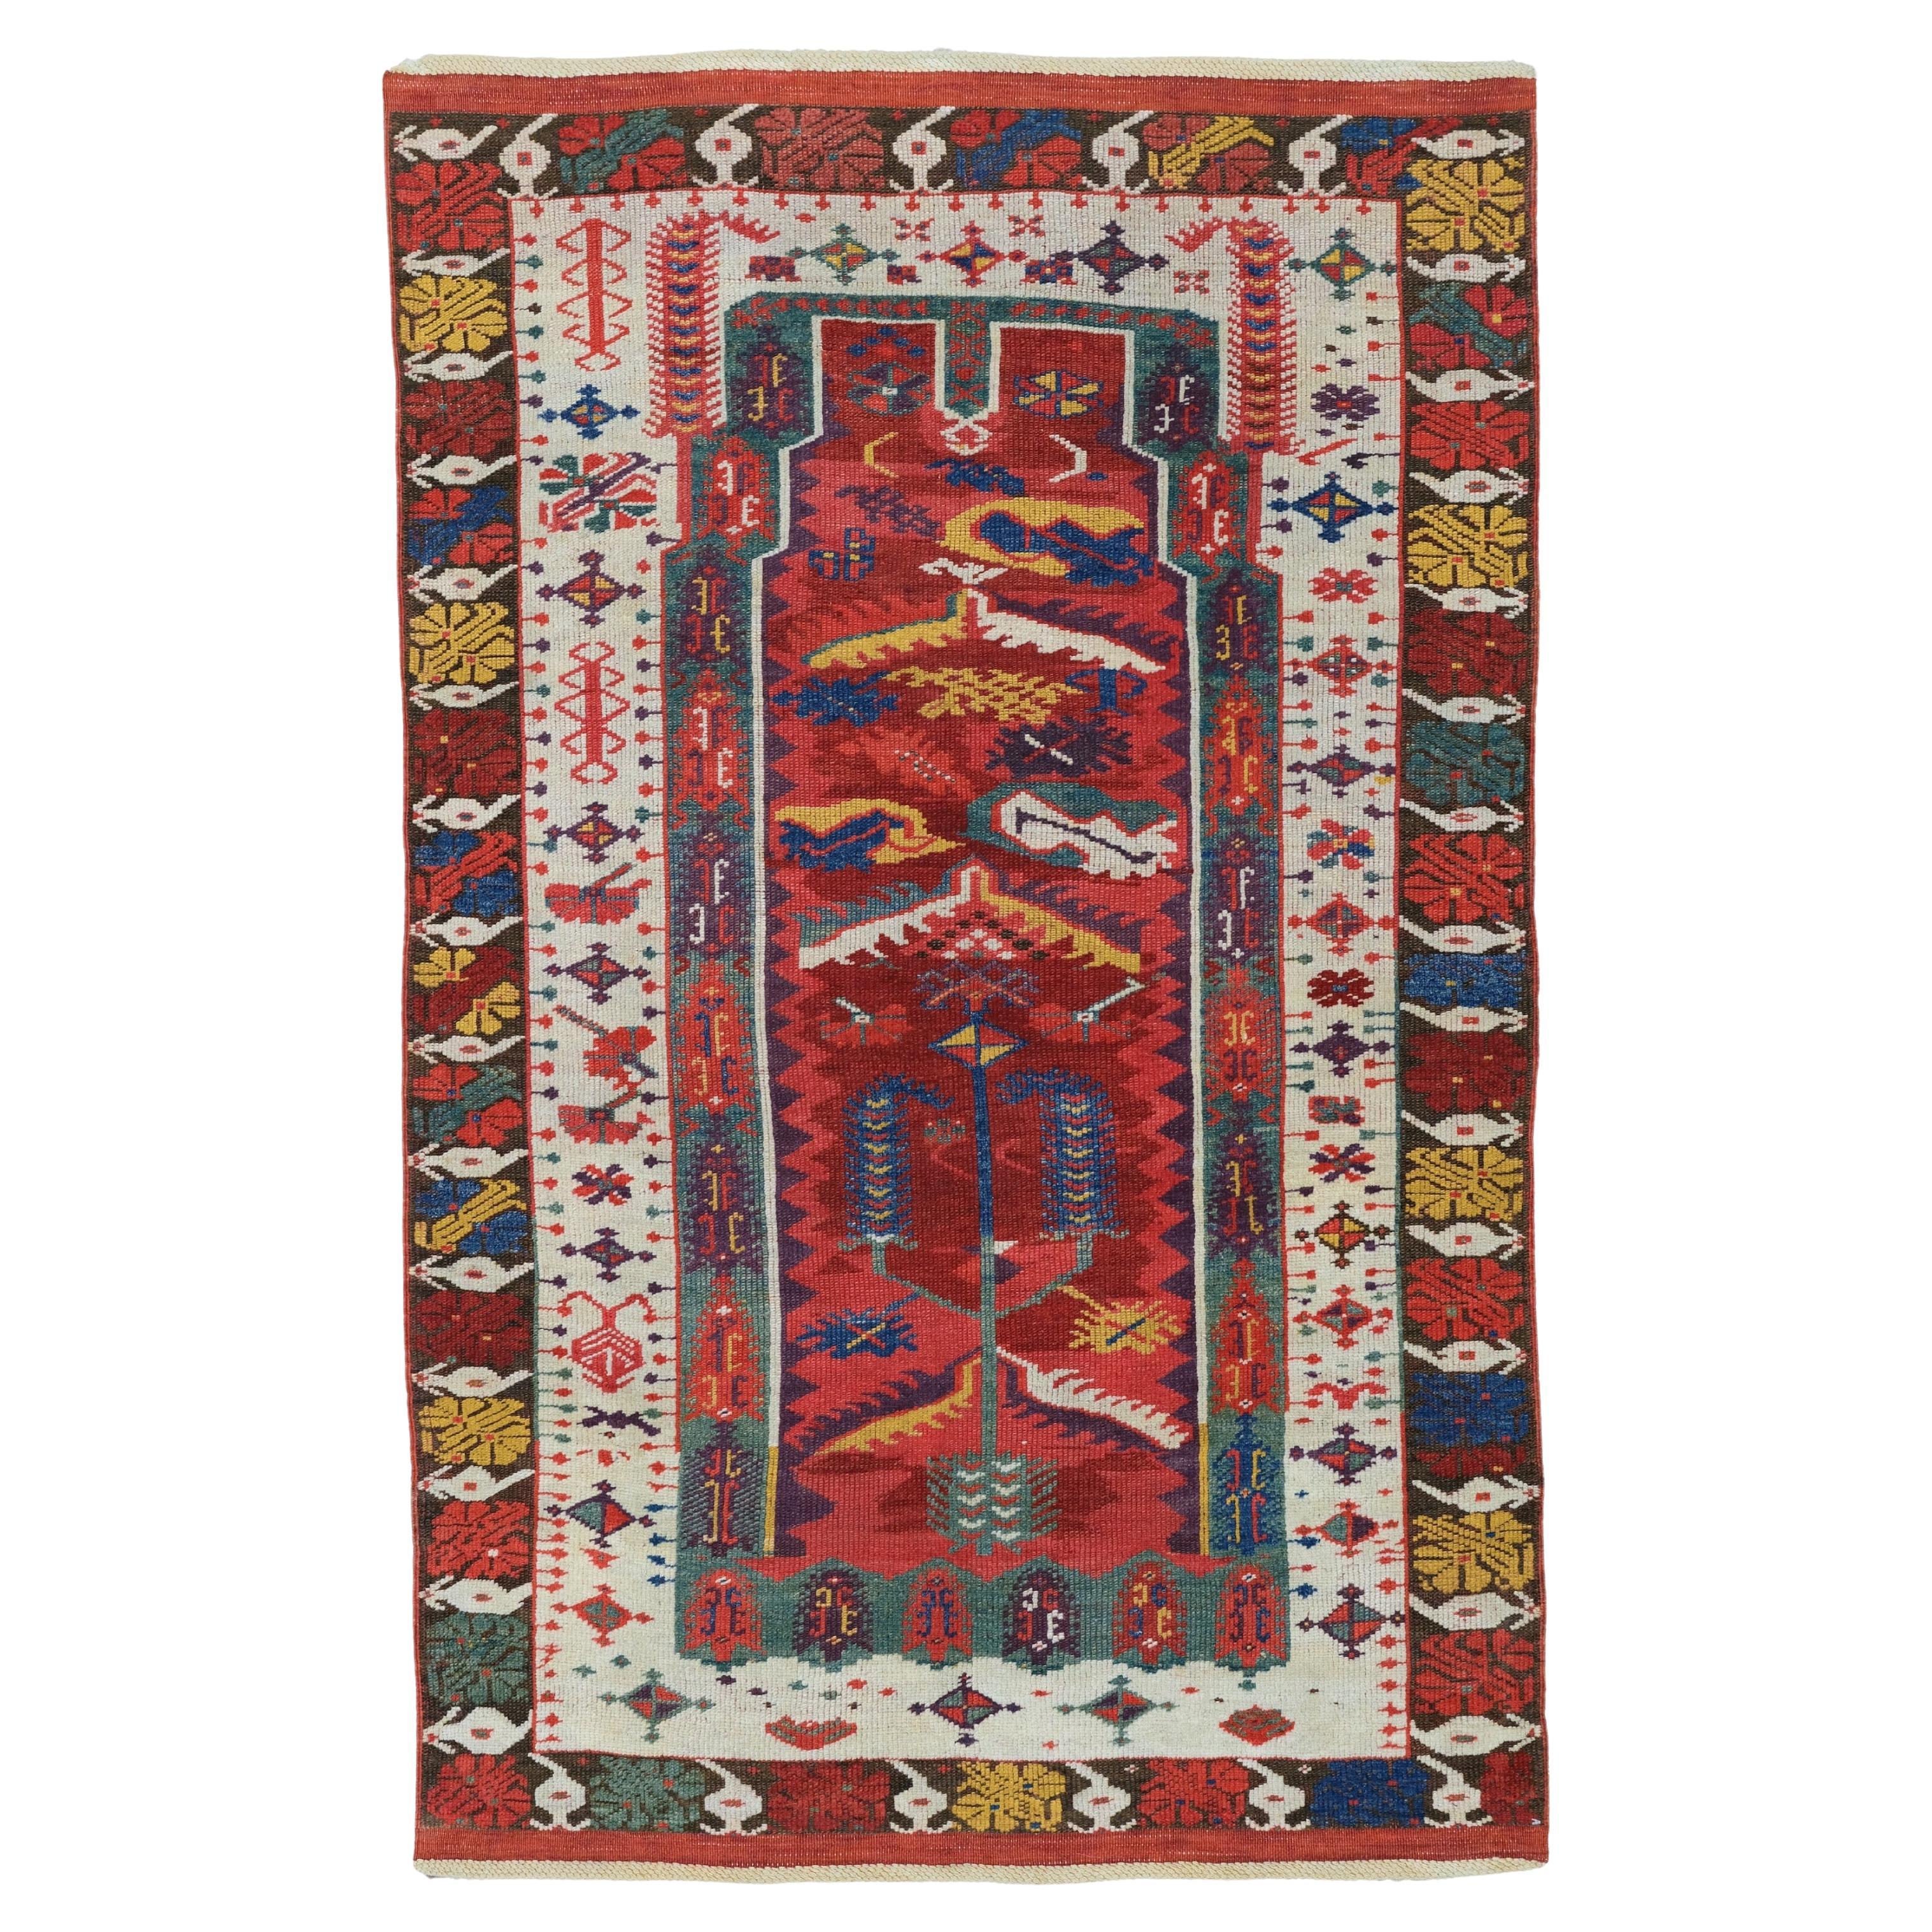 Antique Milas Prayer Rug - 19th Century Anatolian Rug, Handmade Wool Rug